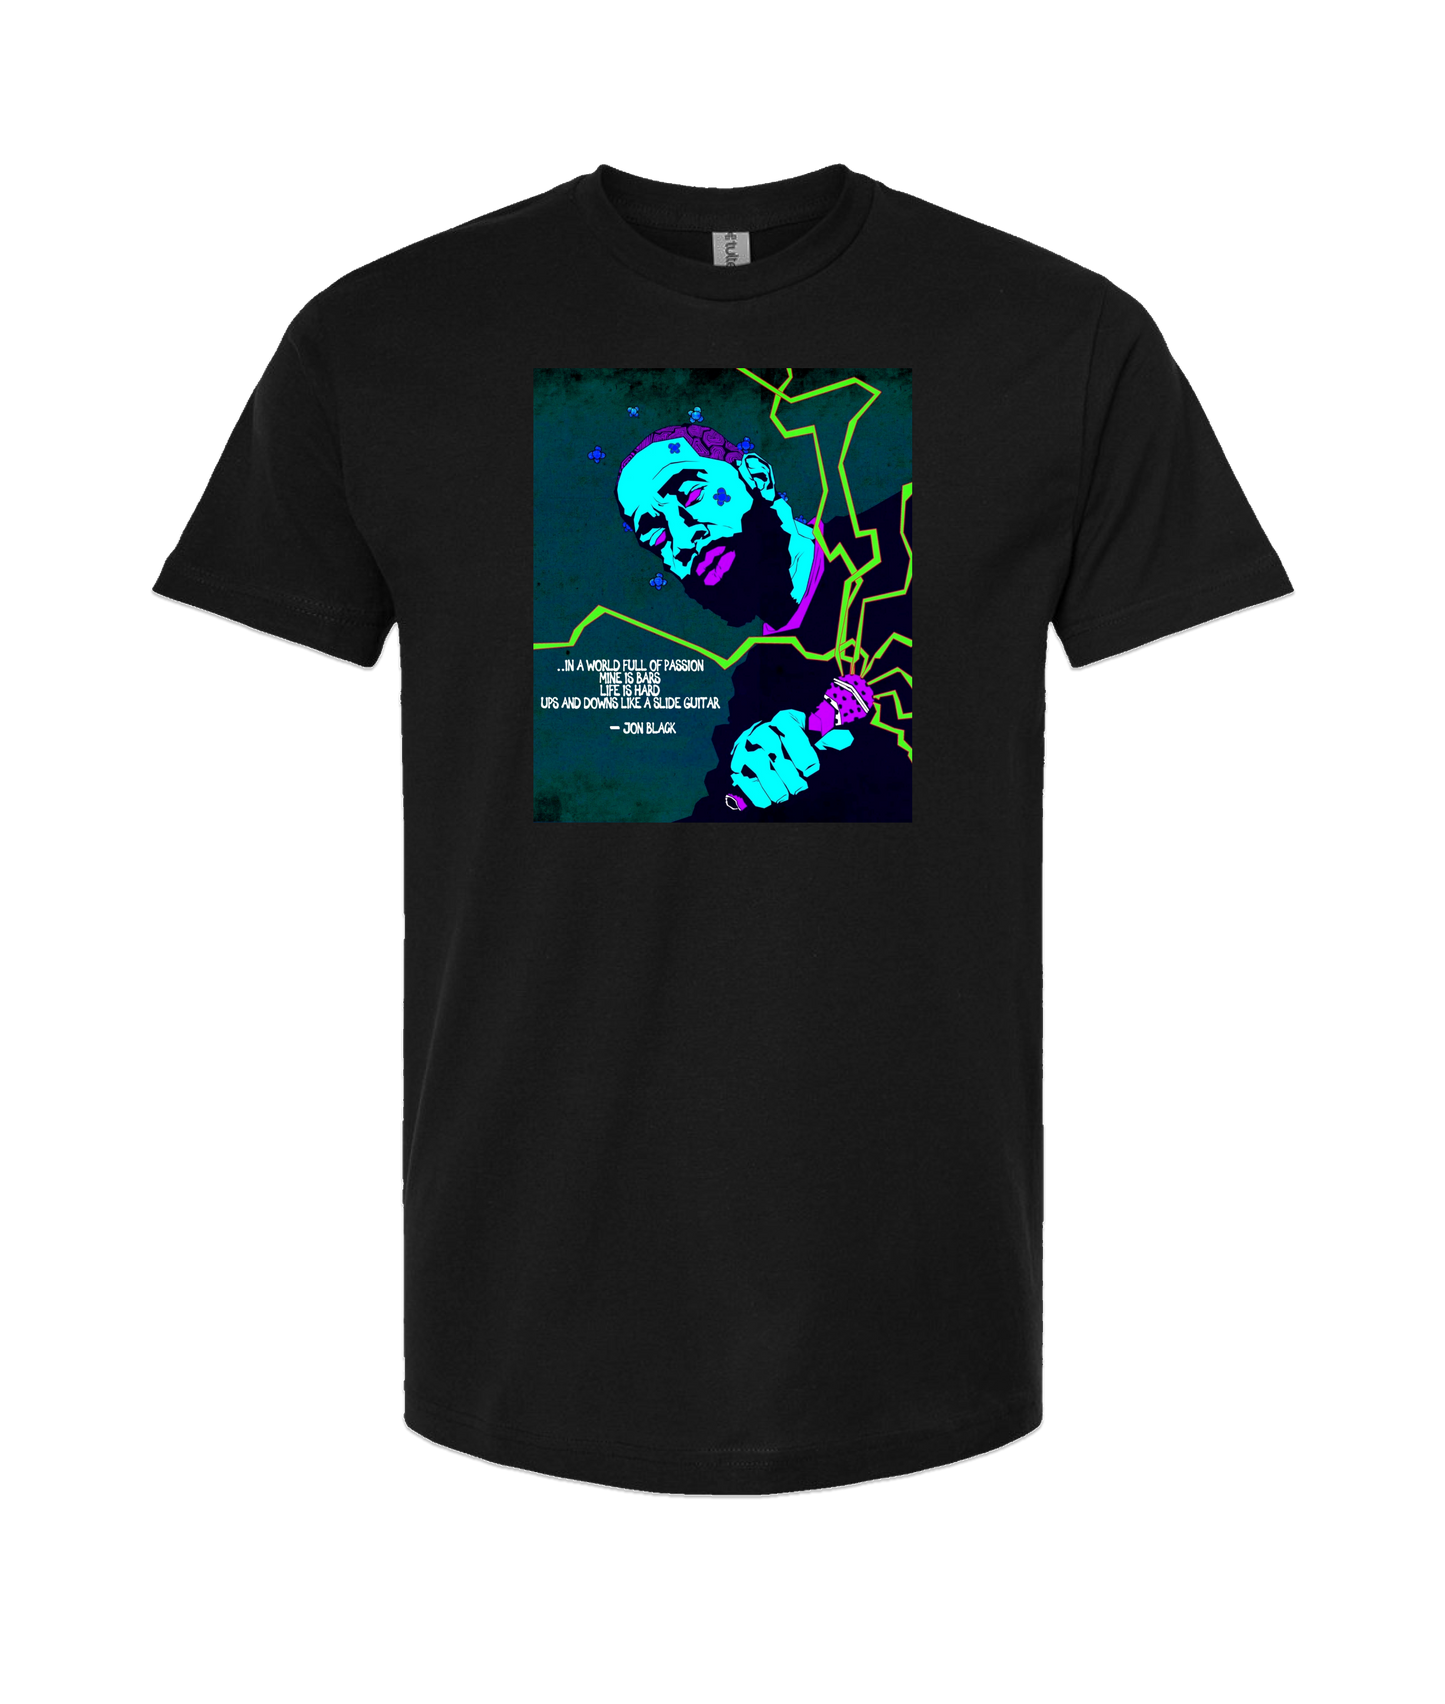 Jon Black - Teal Logo - Black T Shirt